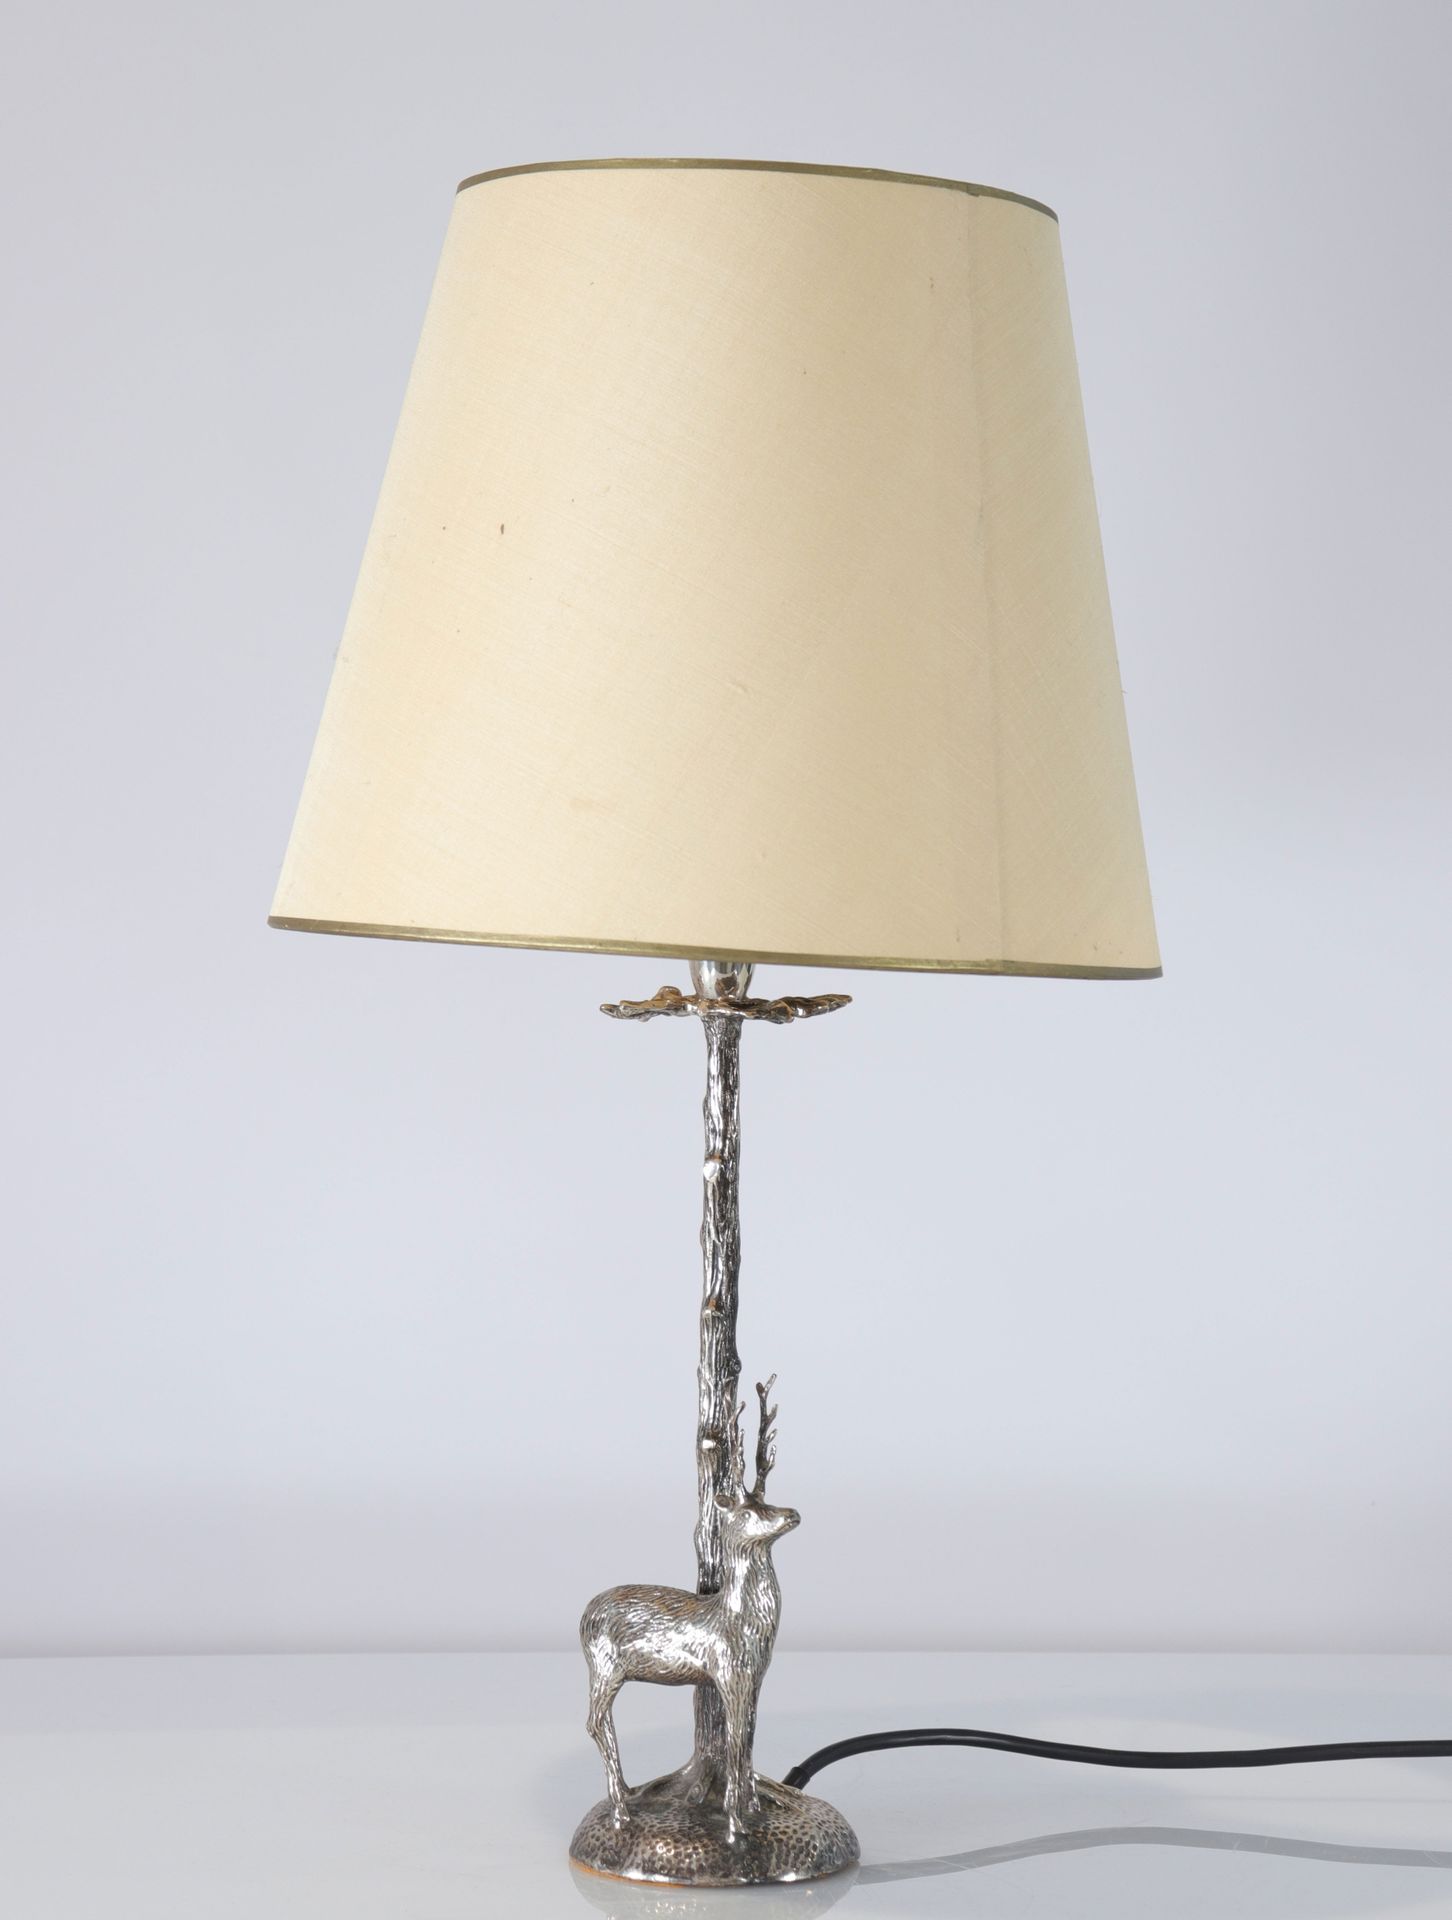 Style Valenti lampe de bureau en bronze argenté Valenti style desk lamp in silve&hellip;